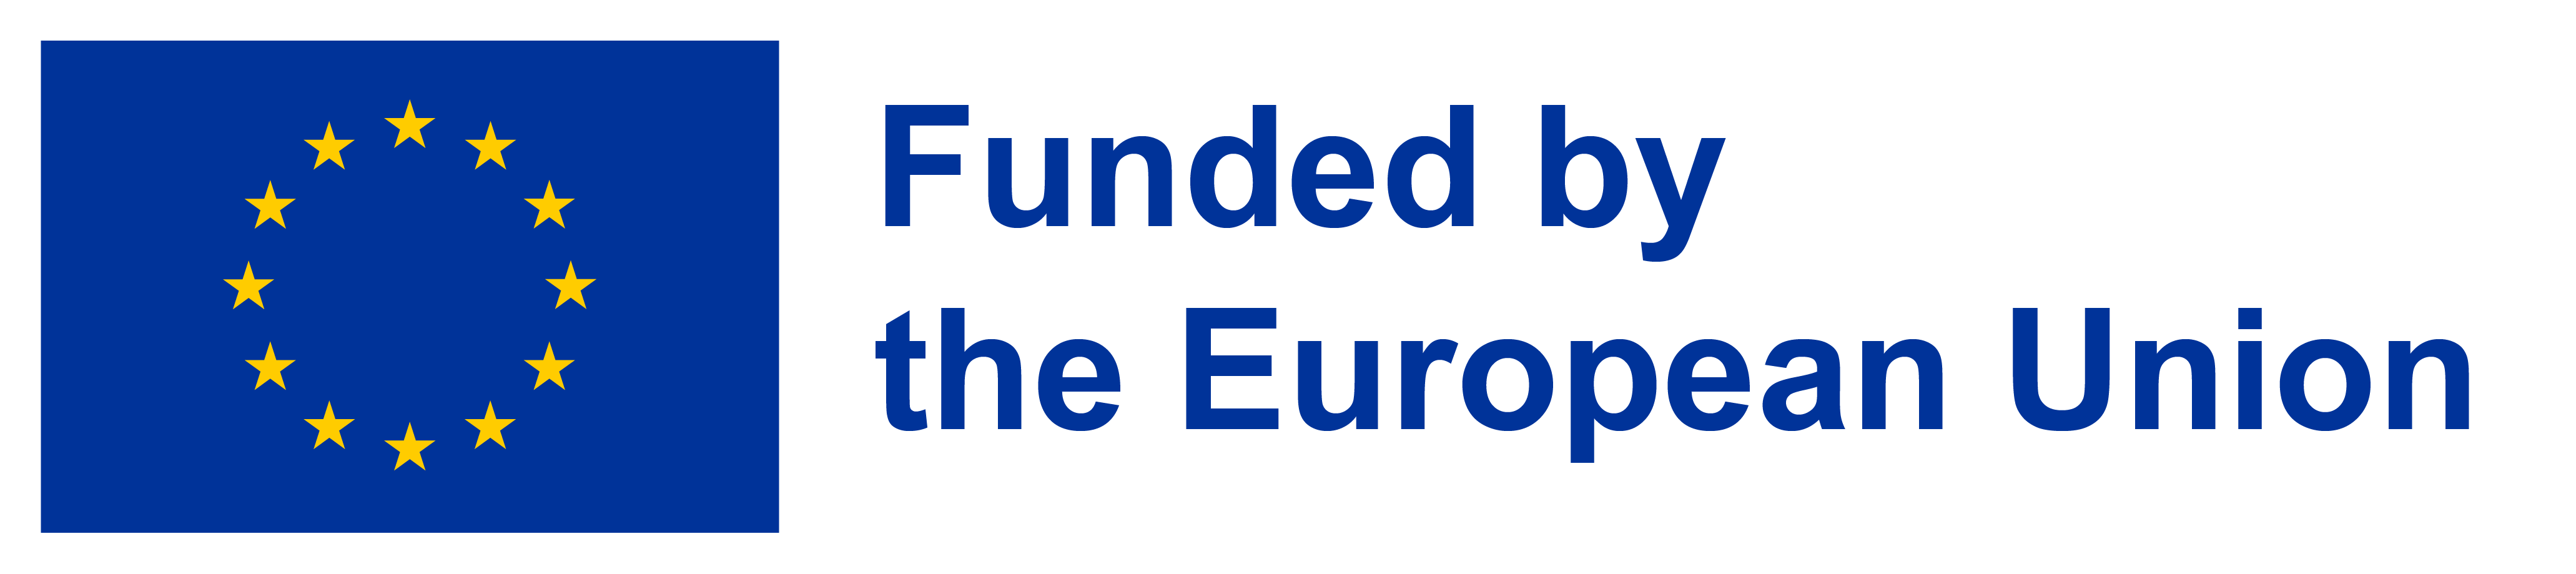 EU:s flagga med tillhörande text Funded by the European Union, The flag of EU and the following text Funded by the European Union